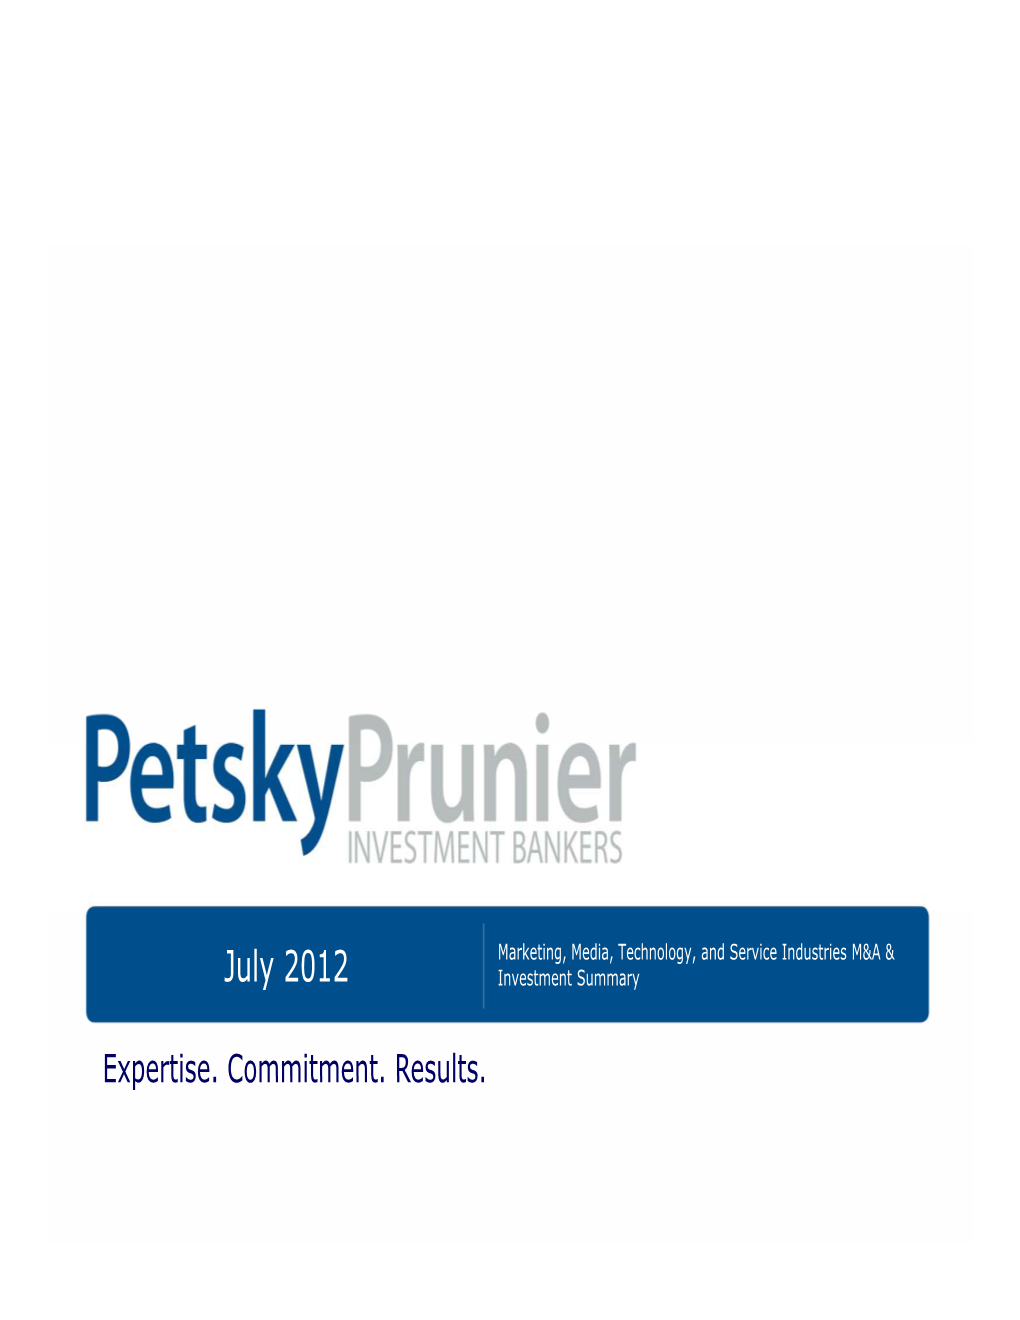 July 2012 Investment Summary